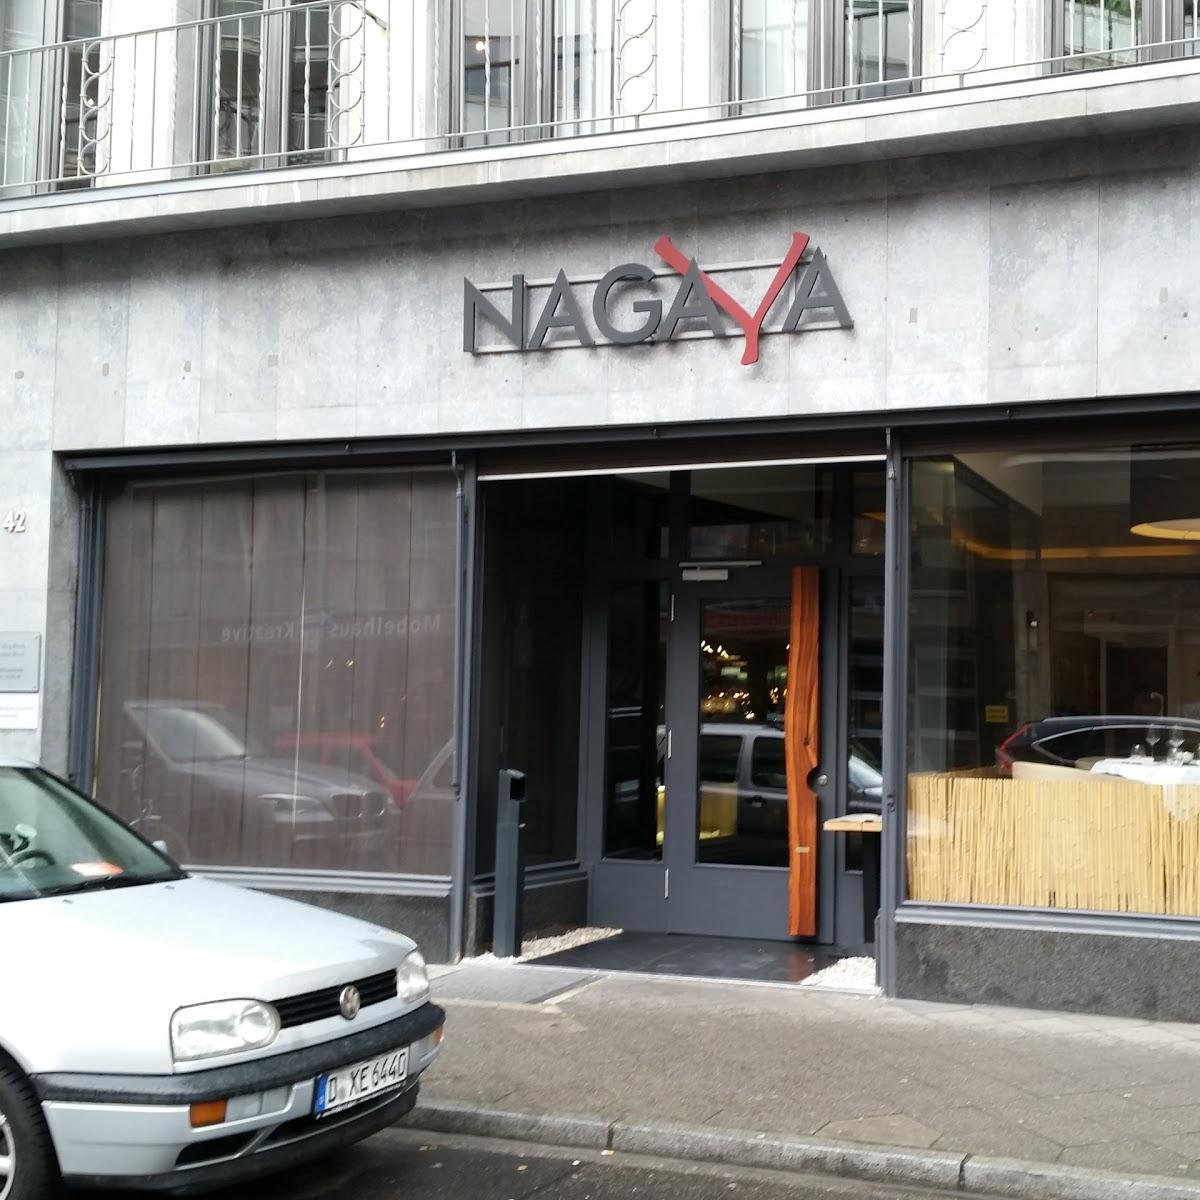 Restaurant "Nagaya" in  Düsseldorf